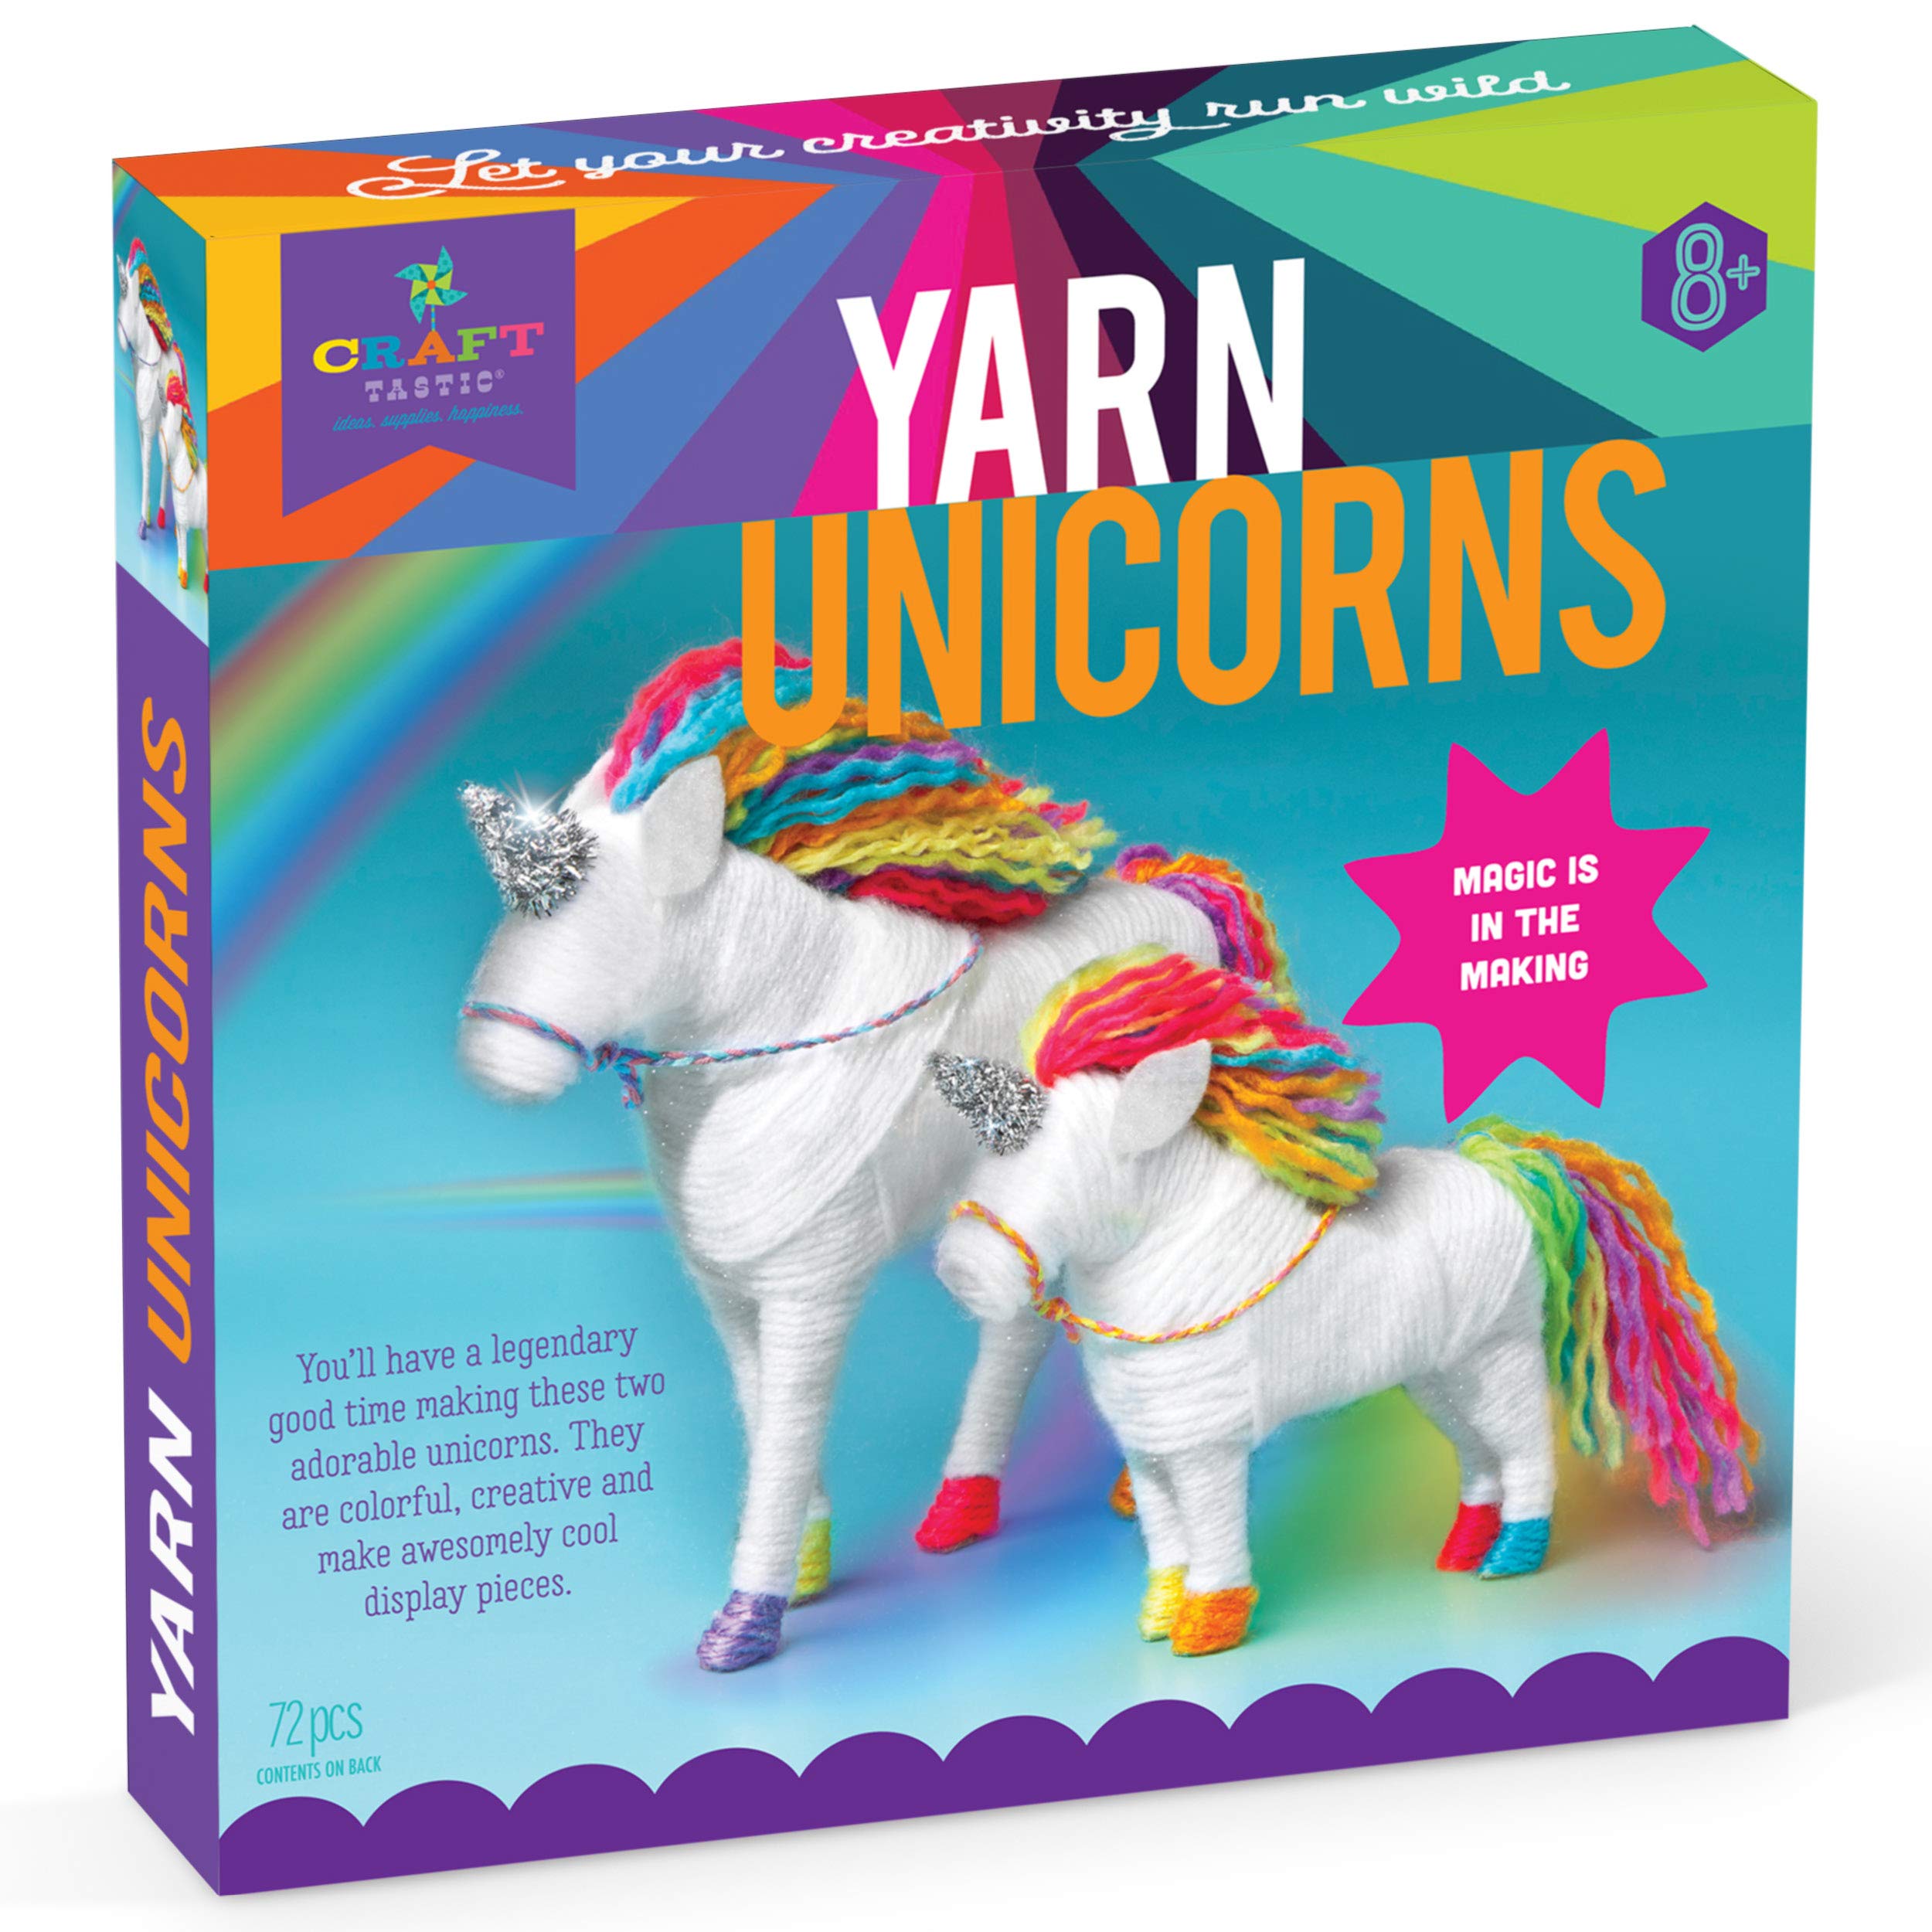 Book Cover Craft-tastic â€“ Yarn Unicorns Kit â€“ Craft Kit Makes 2 Yarn-Wrapped Unicorns